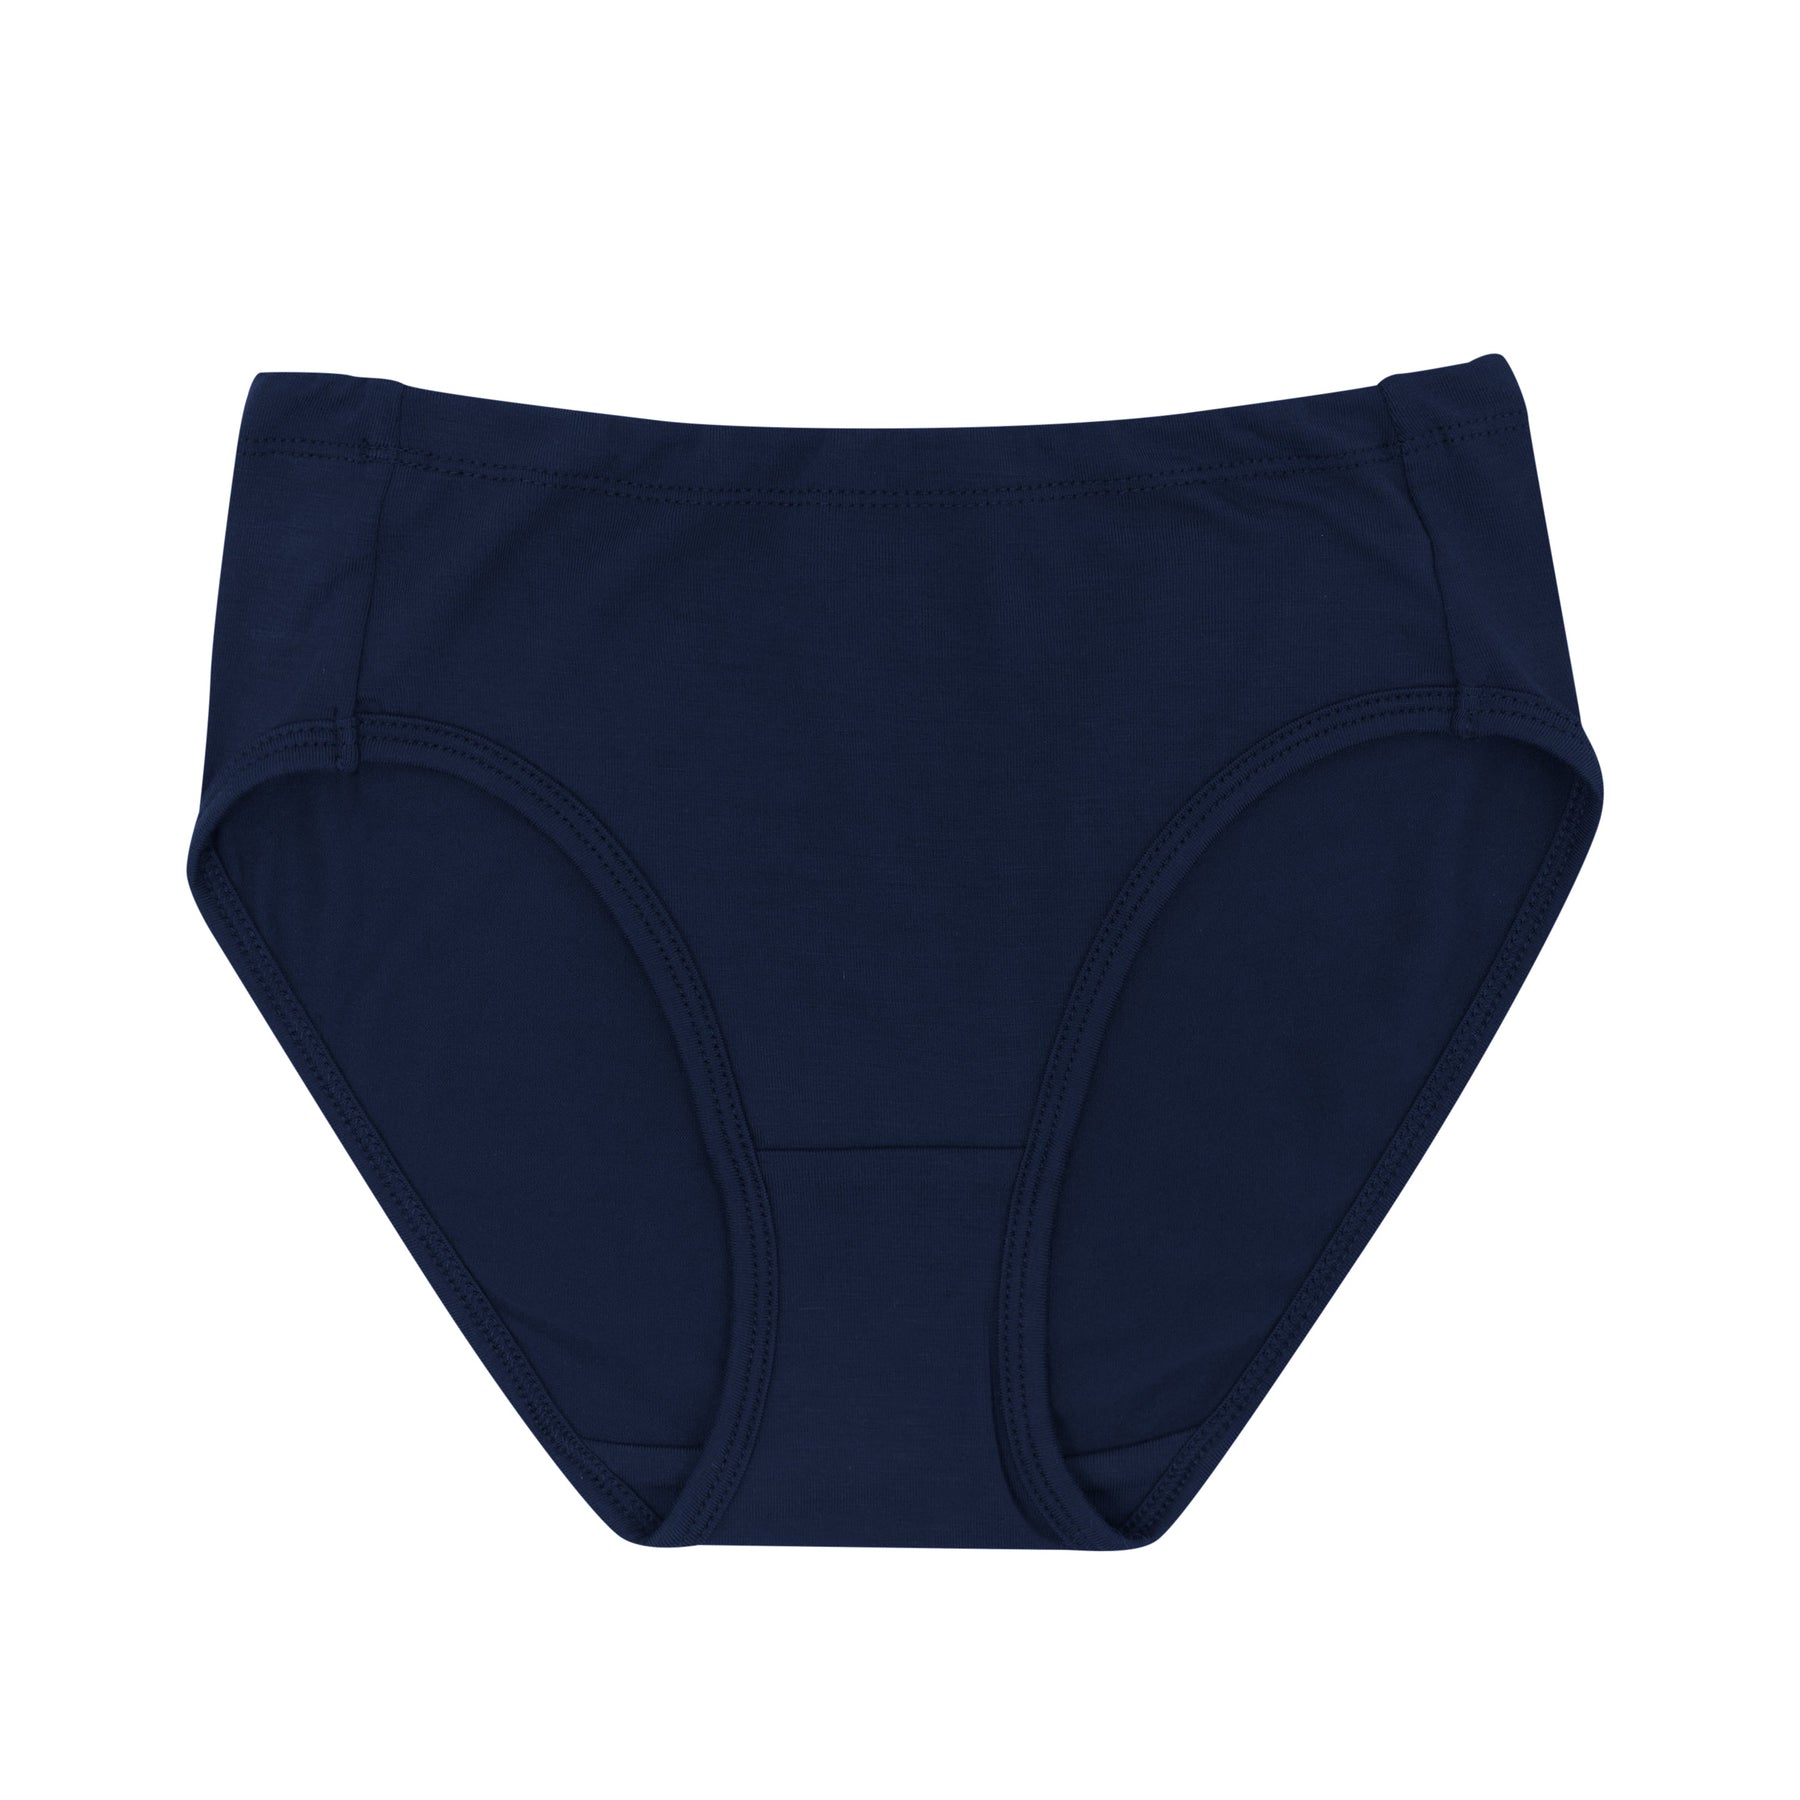 Kyte Baby Women's Underwear in Navy